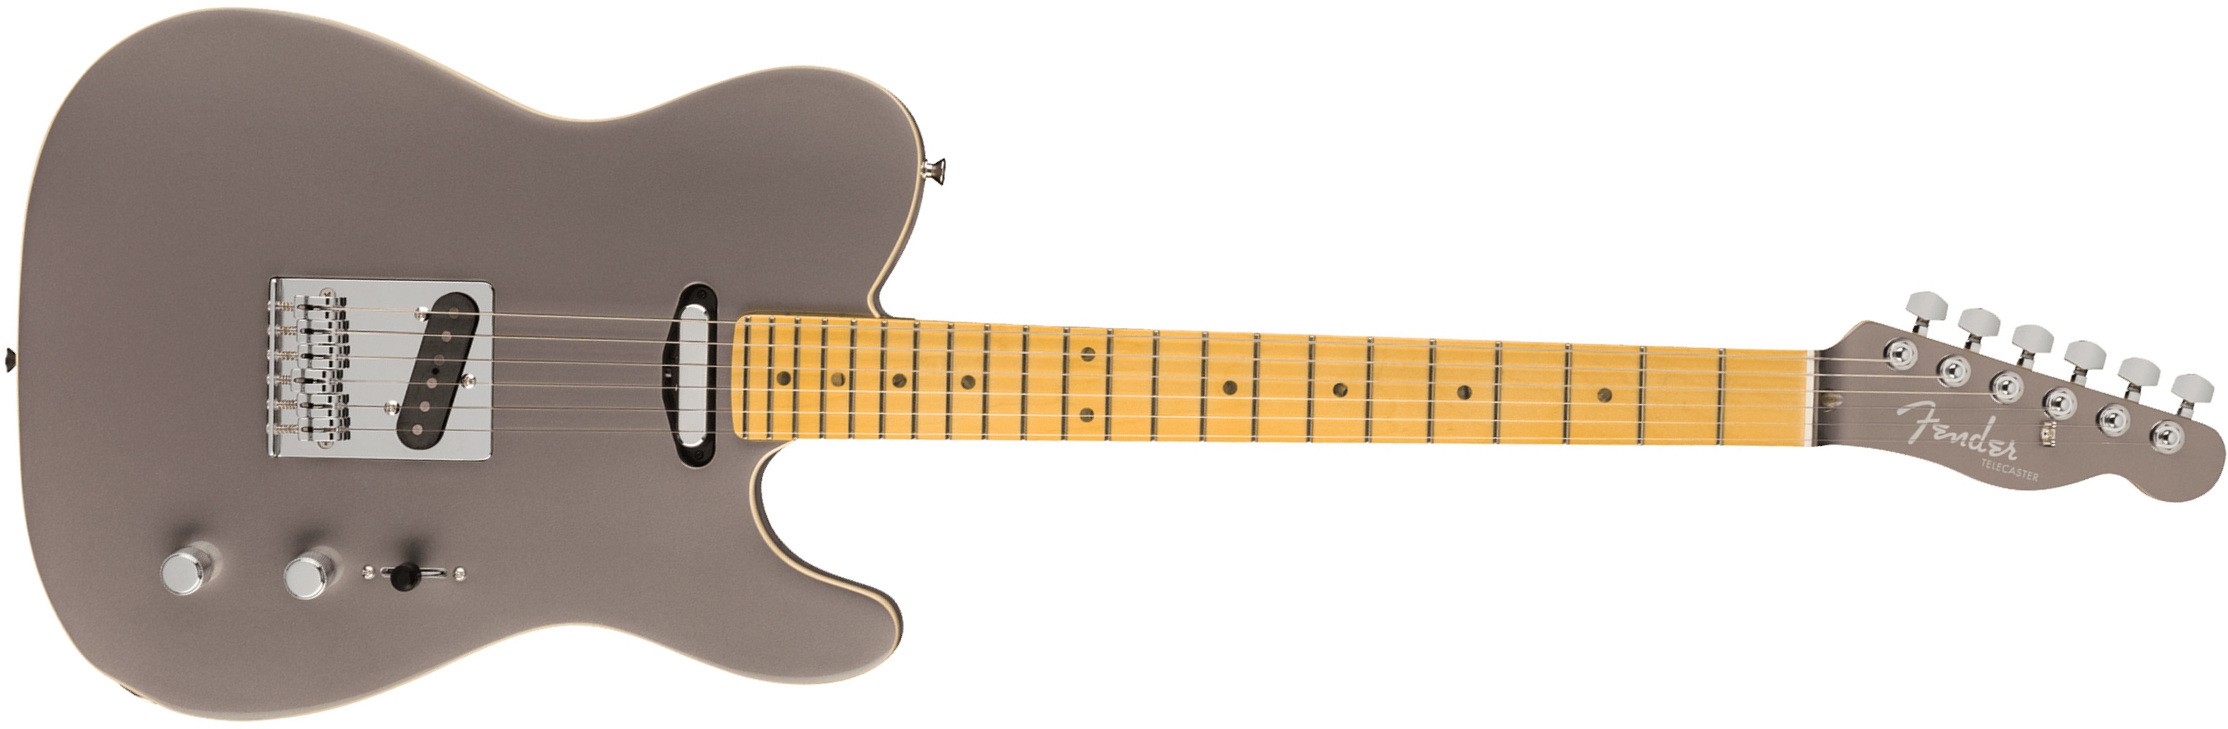 Fender Tele Aerodyne Special Jap 2s Ht Mn - Dolphin Gray Metallic - E-Gitarre in Teleform - Main picture